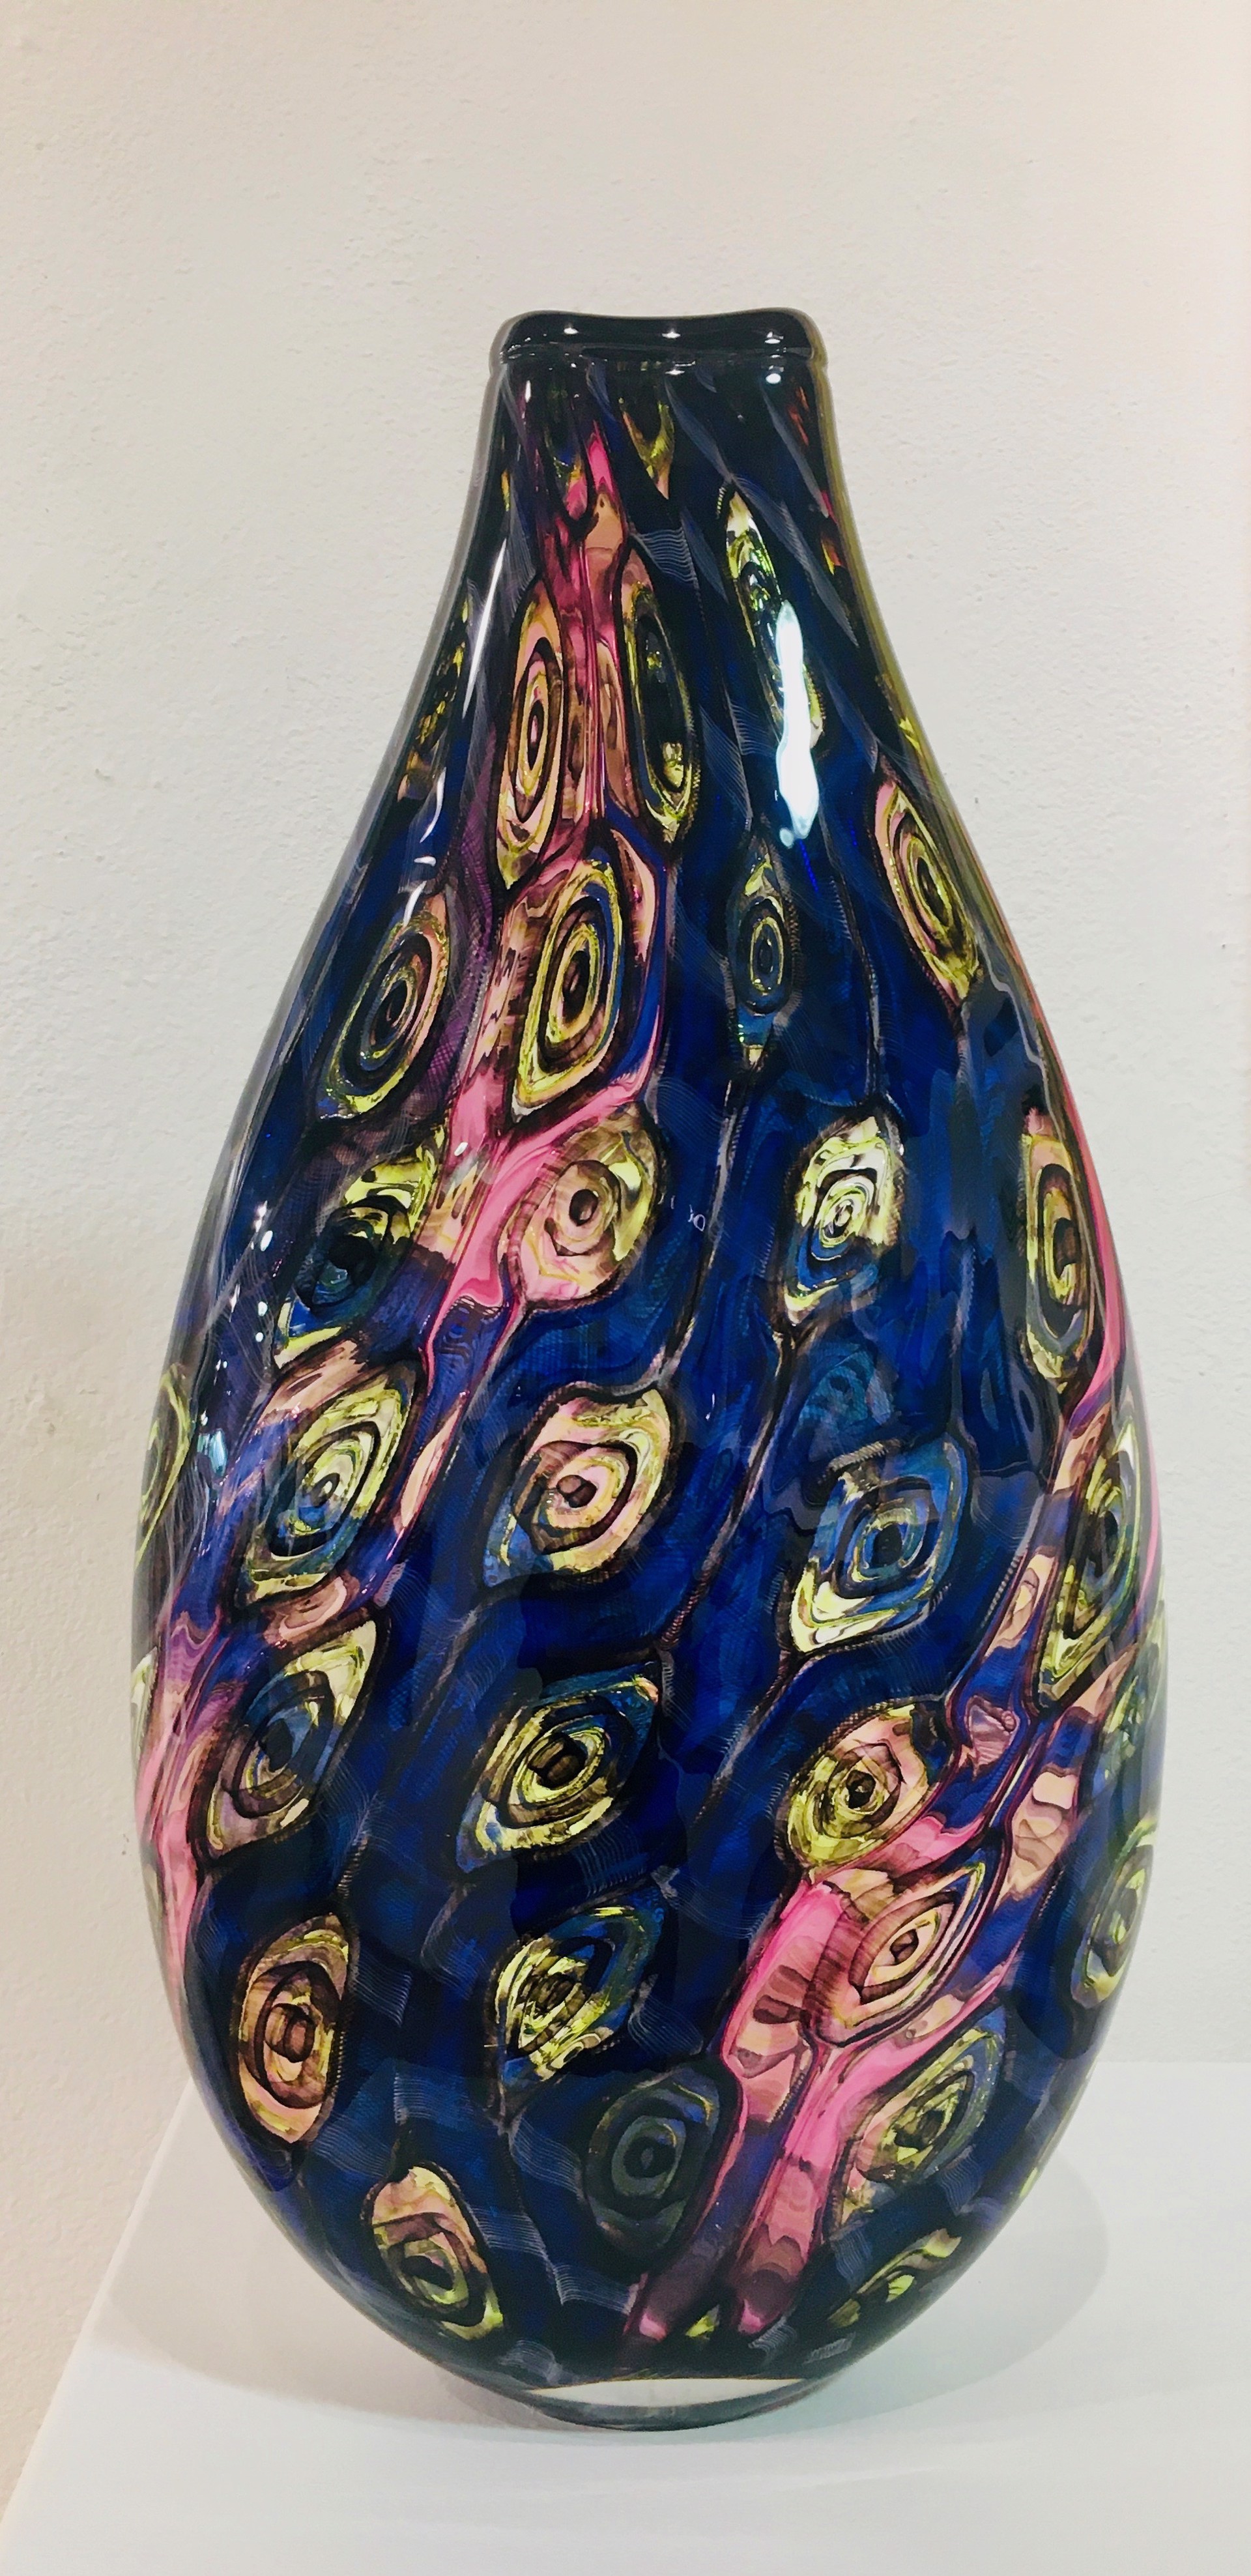 Zanfrico Vase by PAUL LOCKWOOD